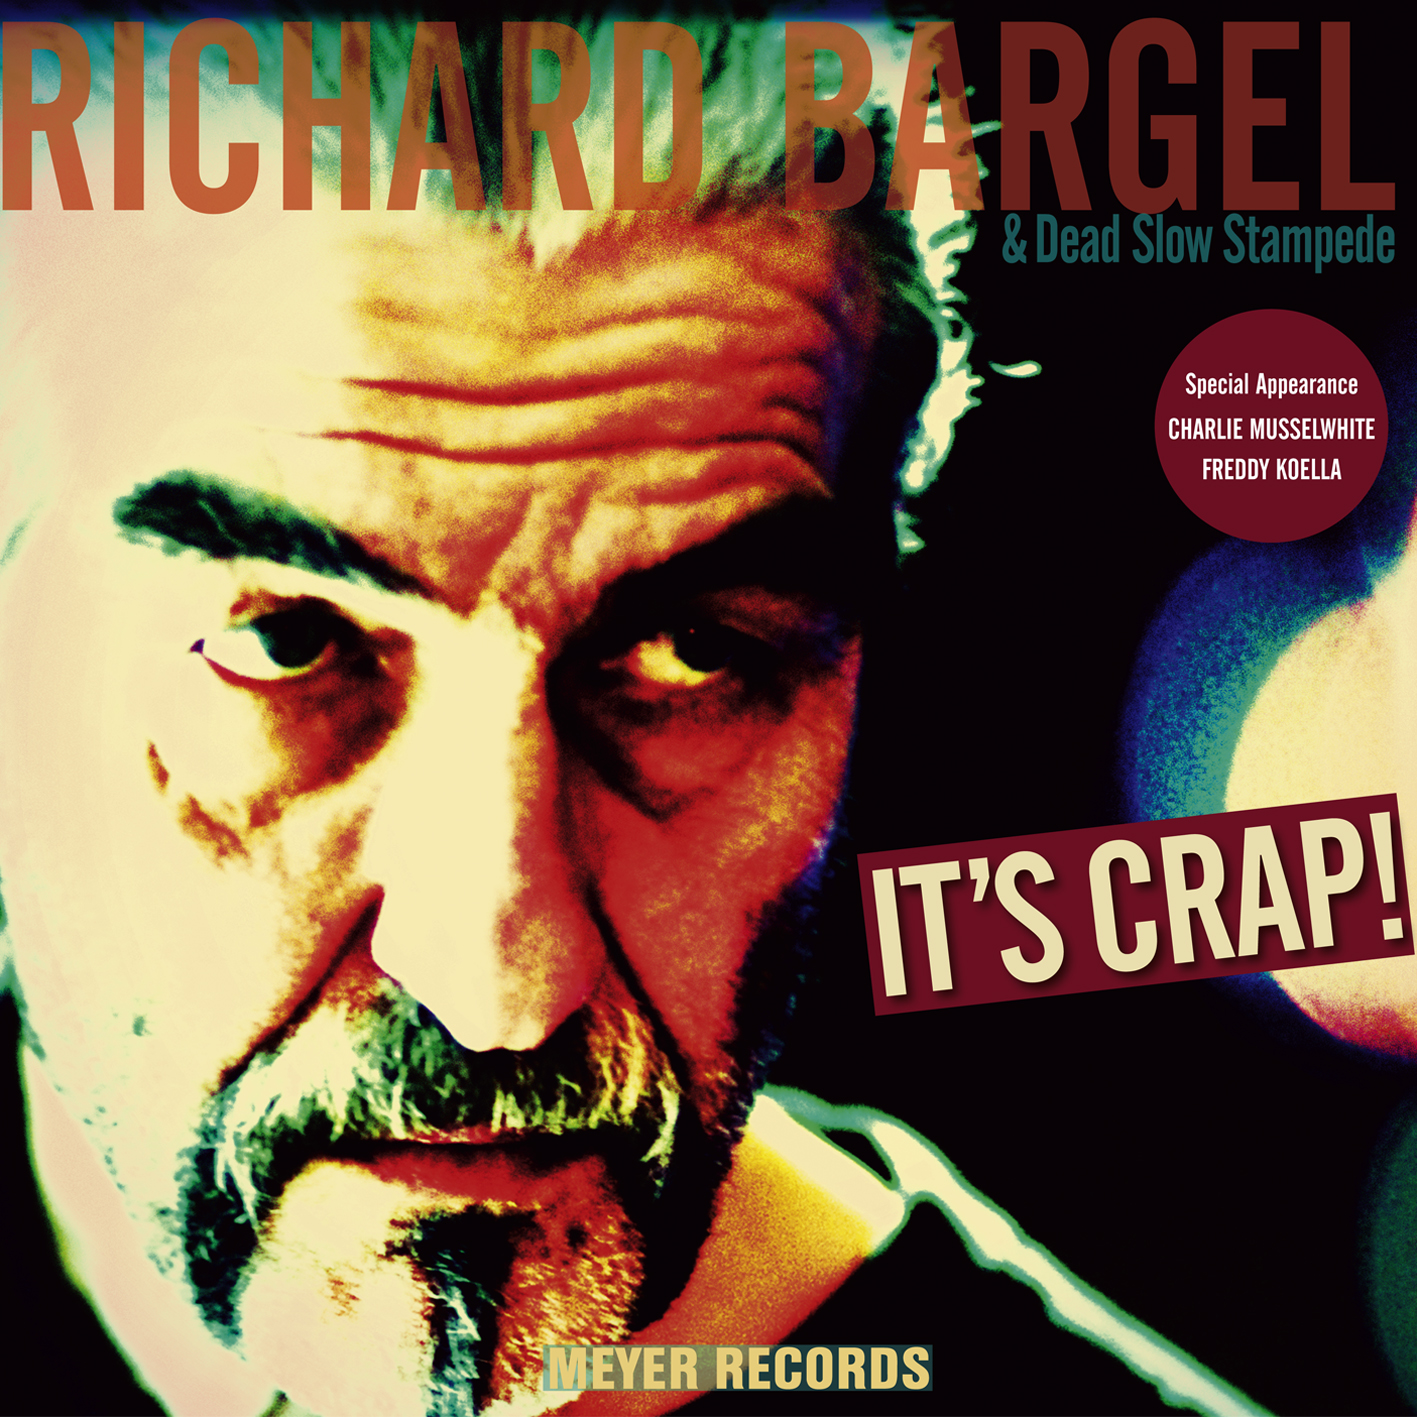 Richard Bargel – “It’s Crap!” (Meyer Records/Rough Trade)